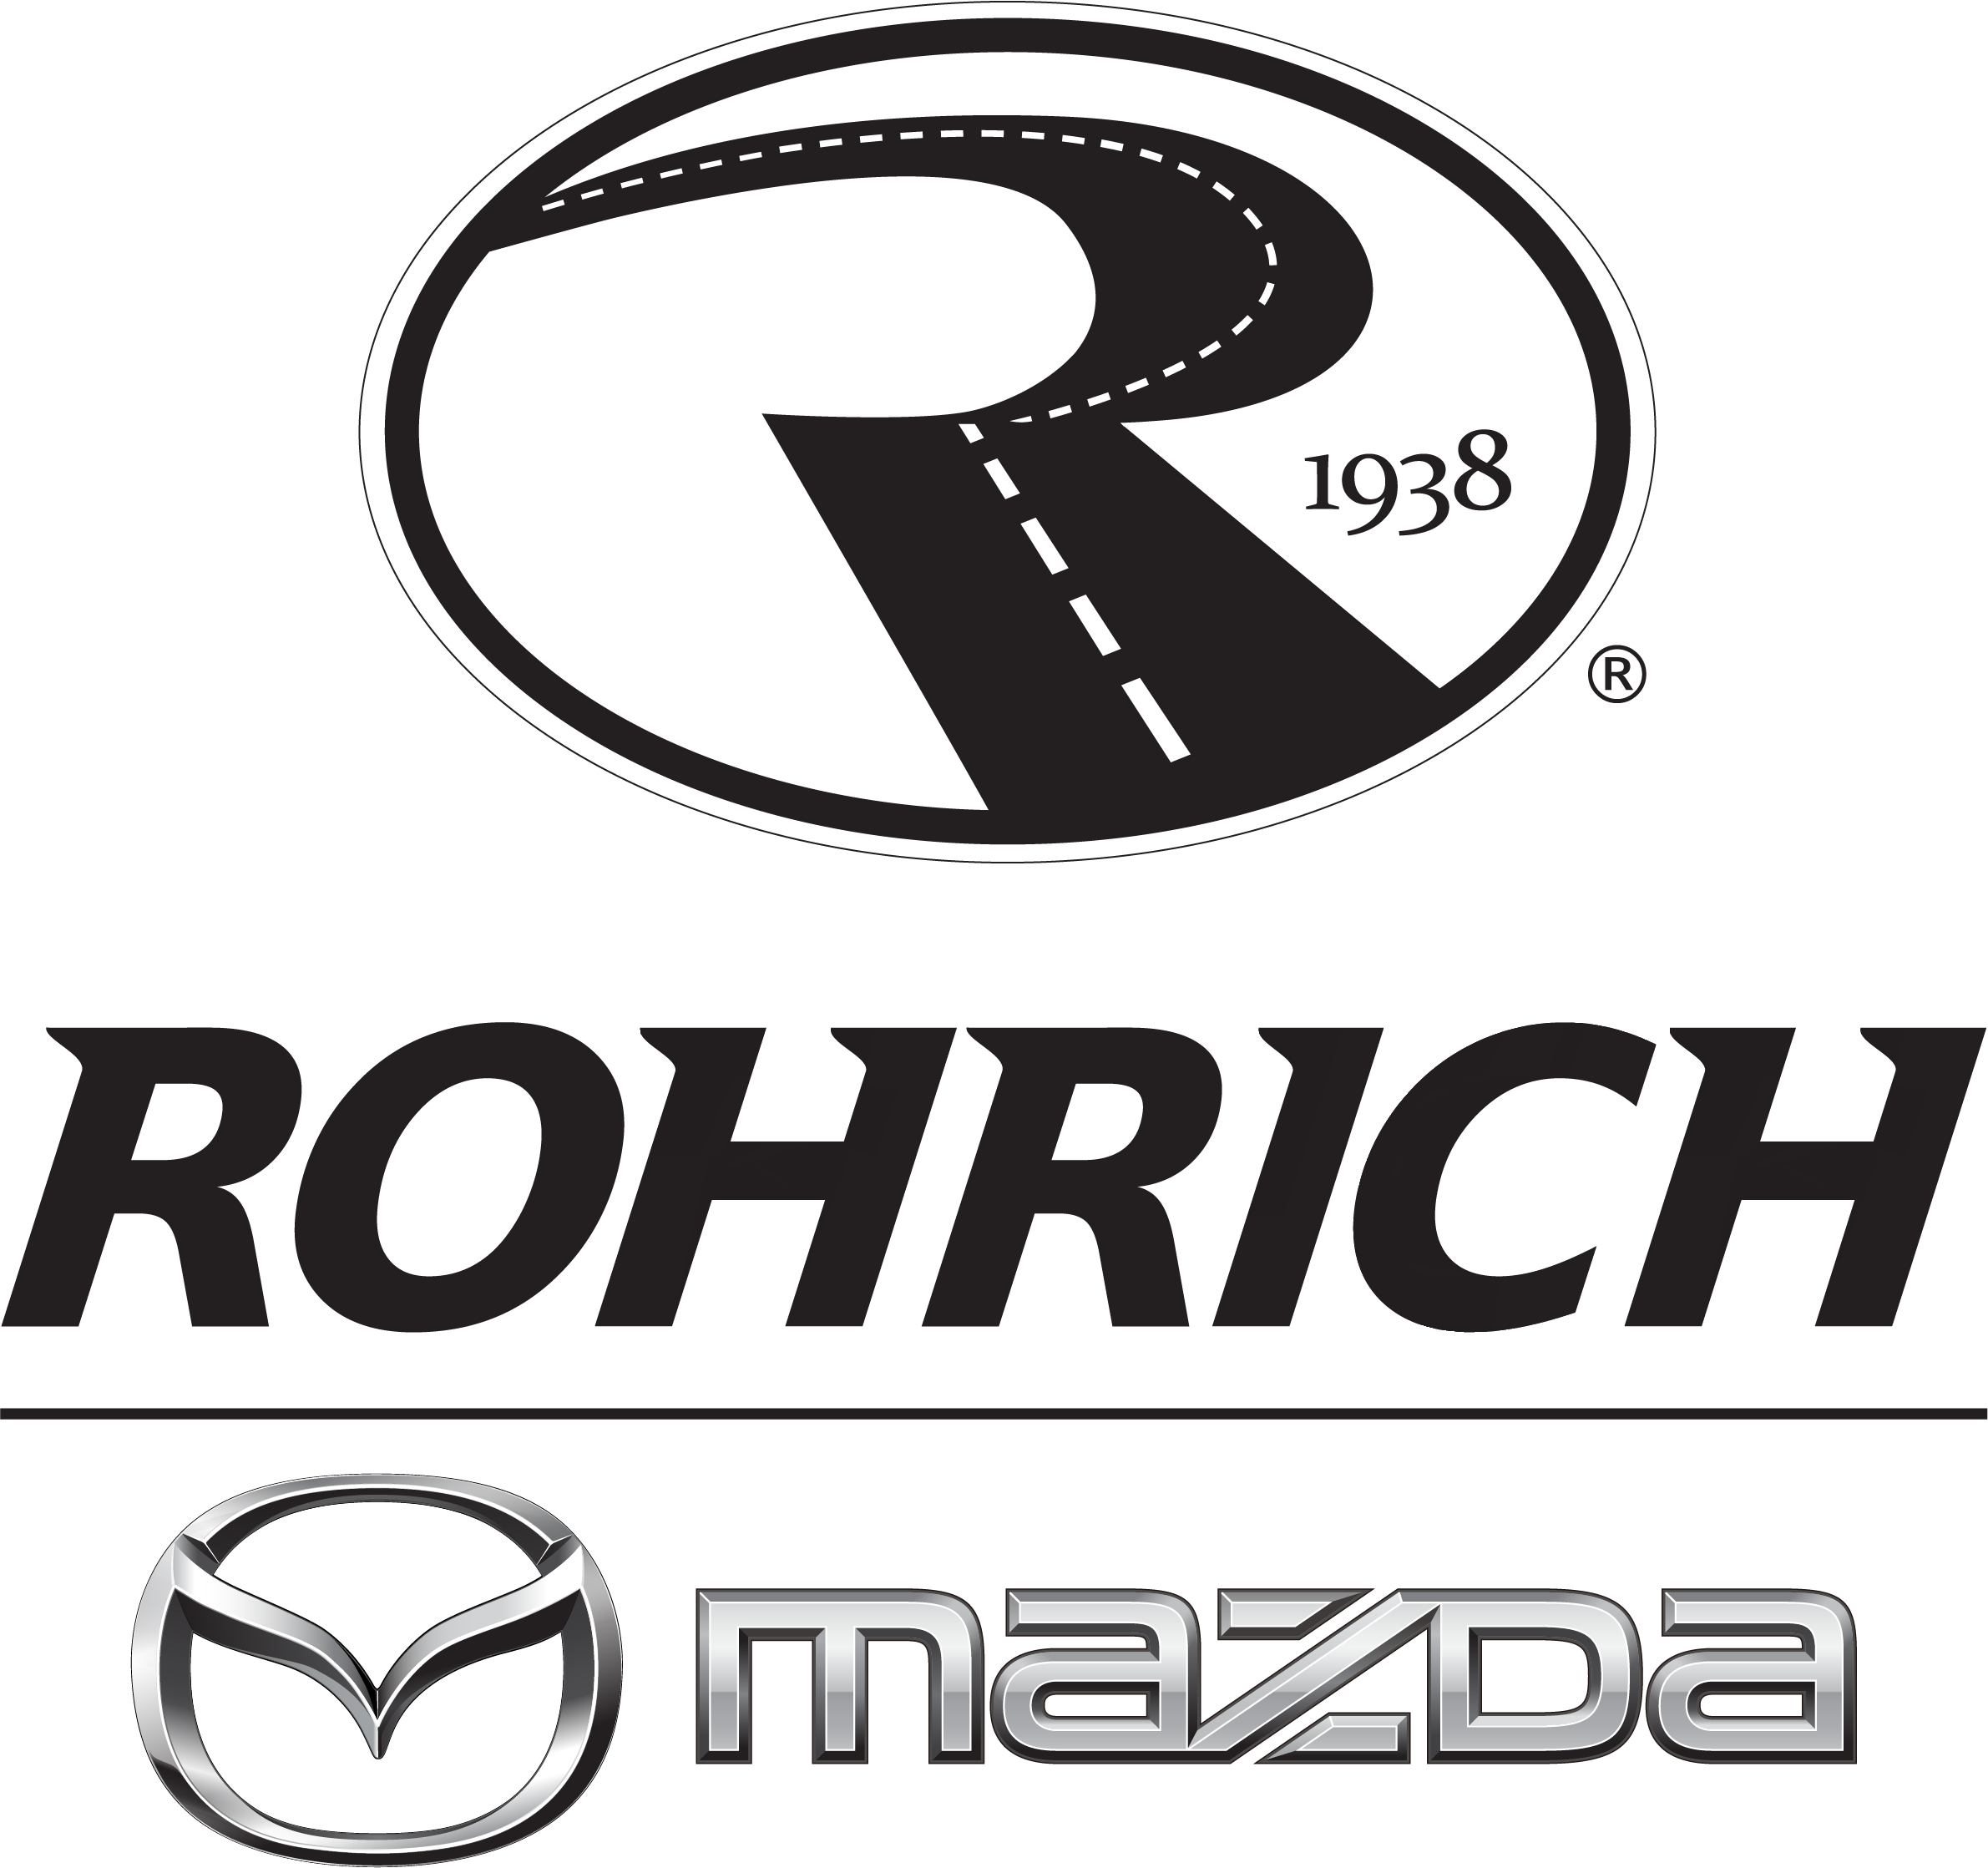 Rohrich Mazdda